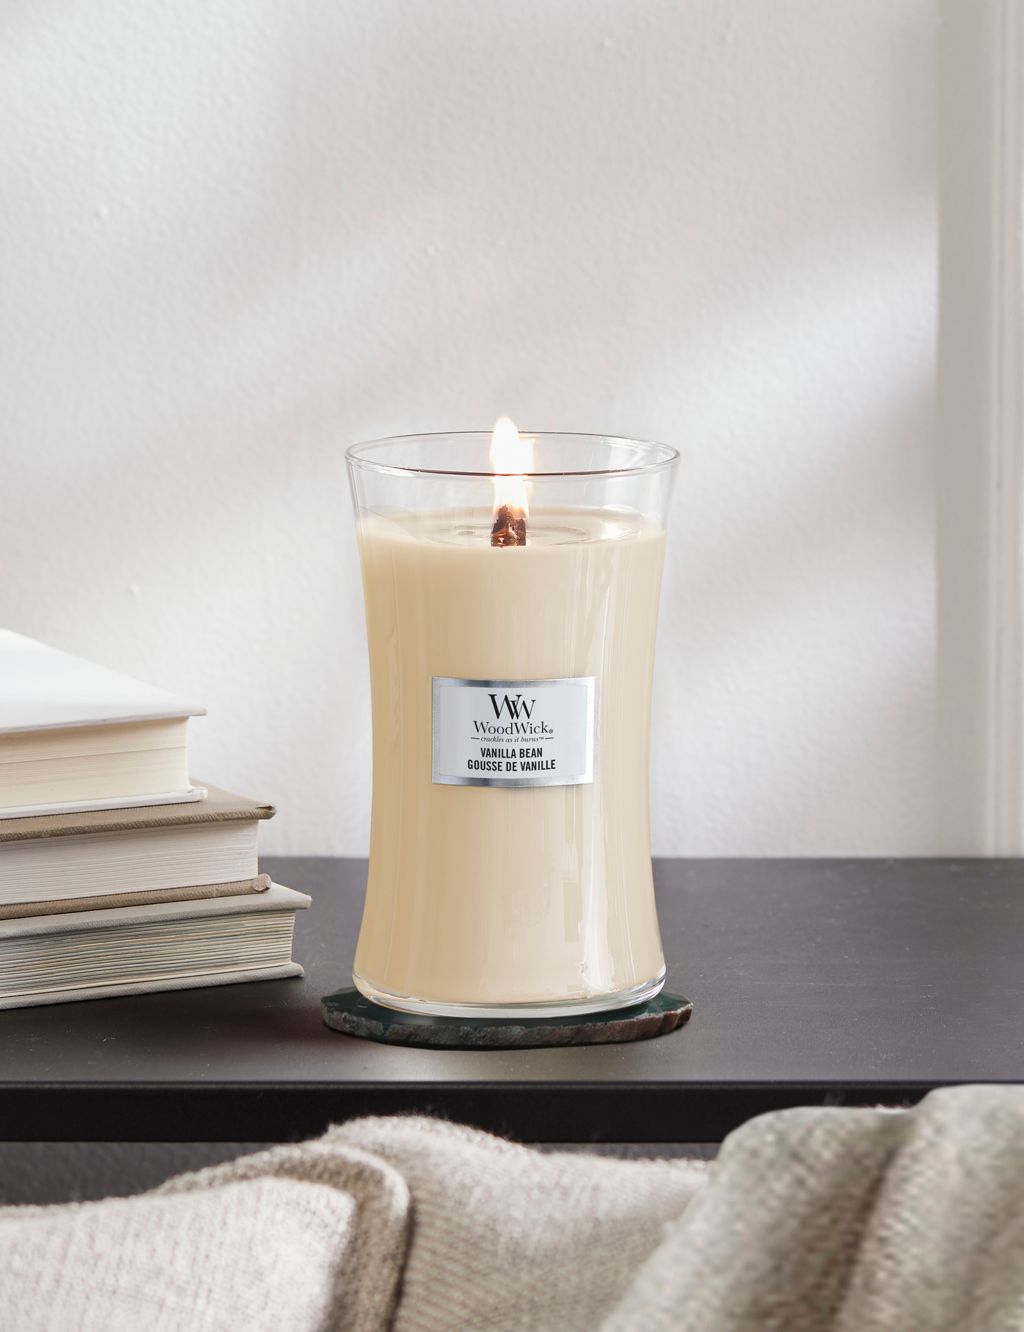 Vanilla & Sea Salt WoodWick® Large Hourglass Candle - Large Hourglass  Candles